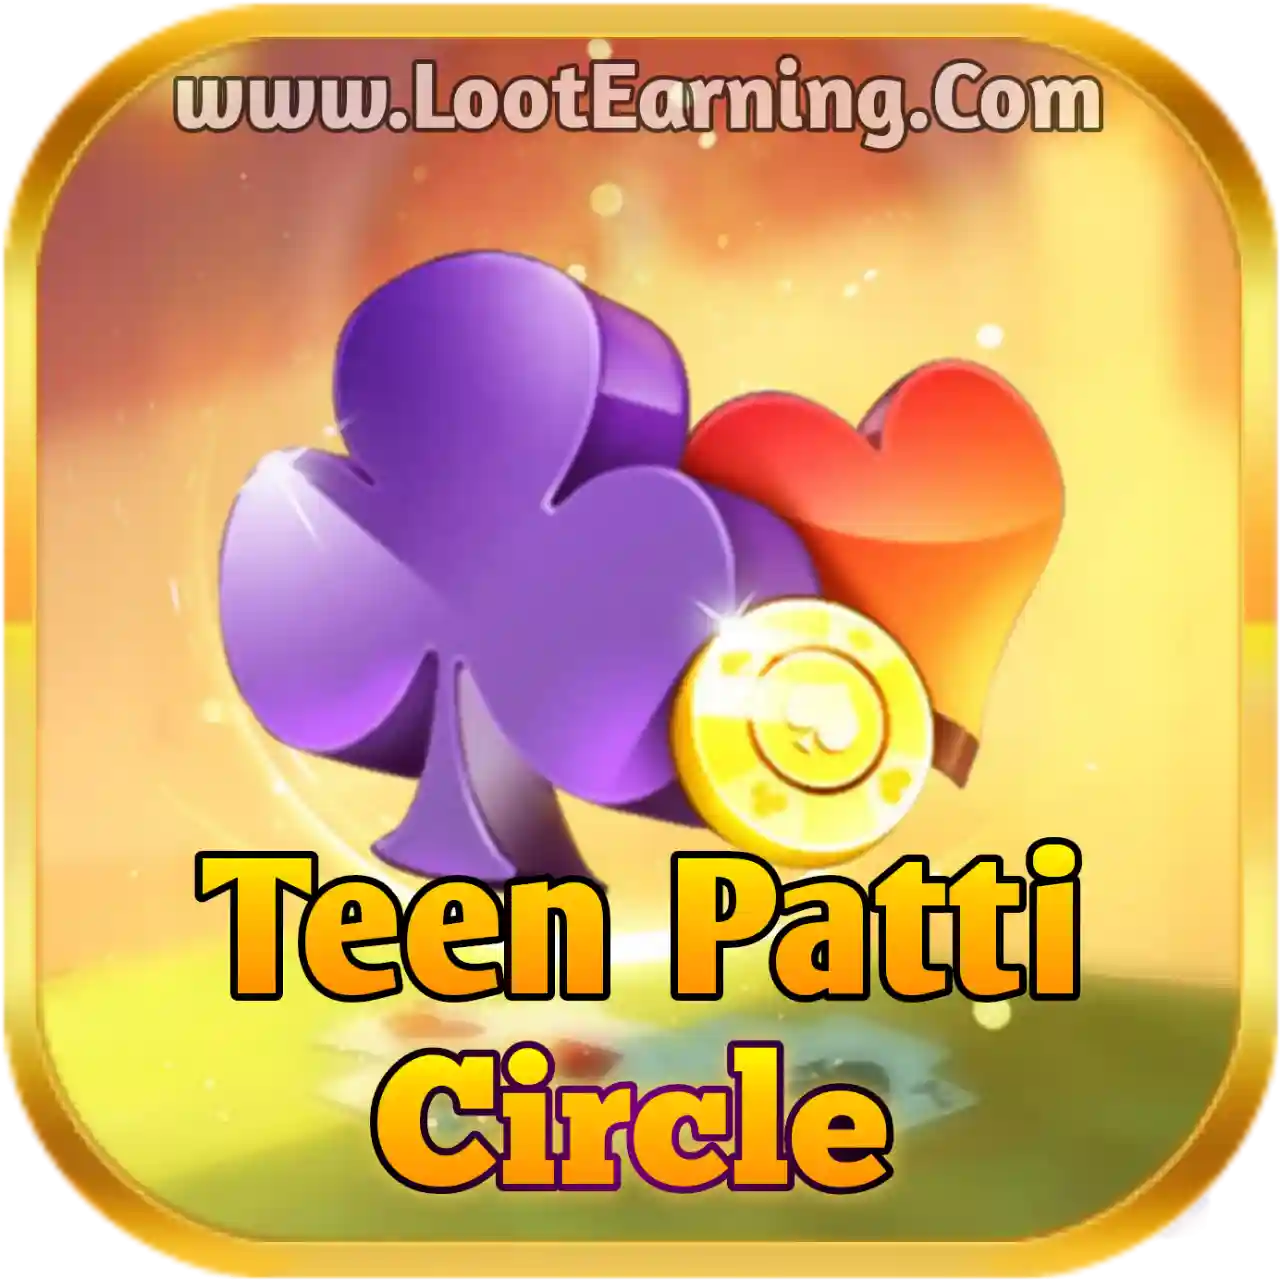 Teen Patti CircleTeen Patti Circle